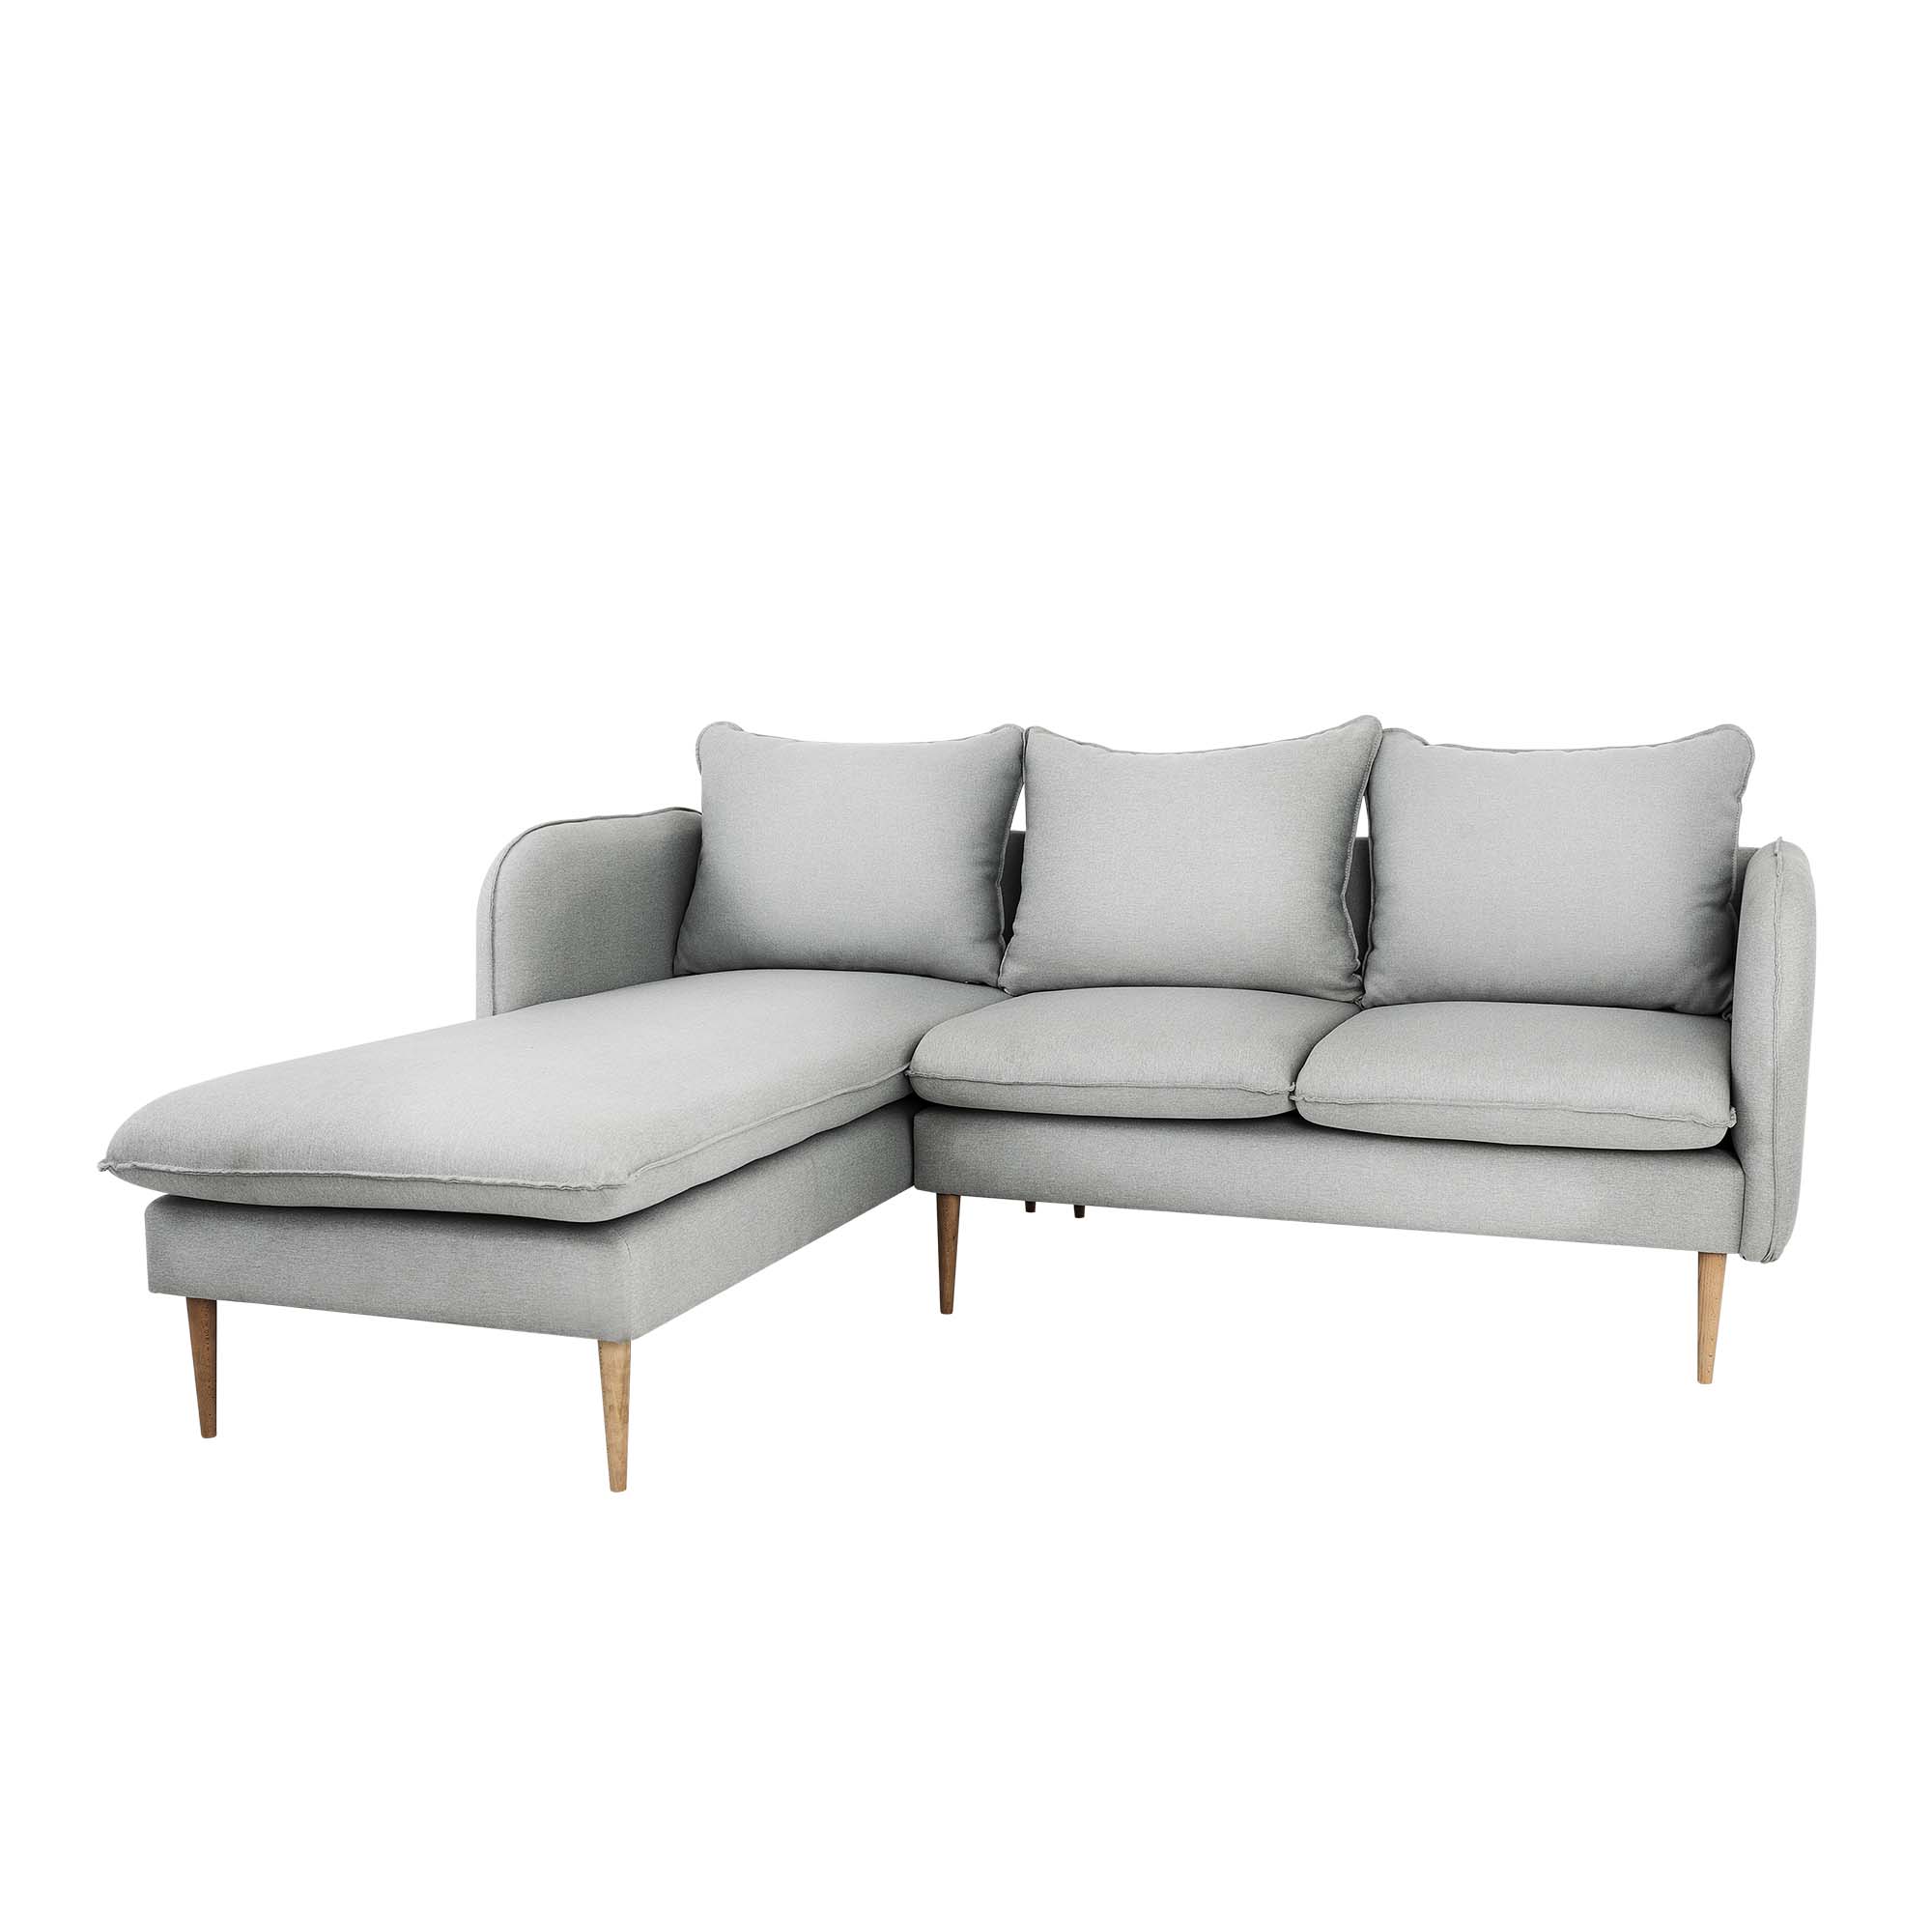 POSH WOOD Corner Sofa Left upholstery colour platinum grey